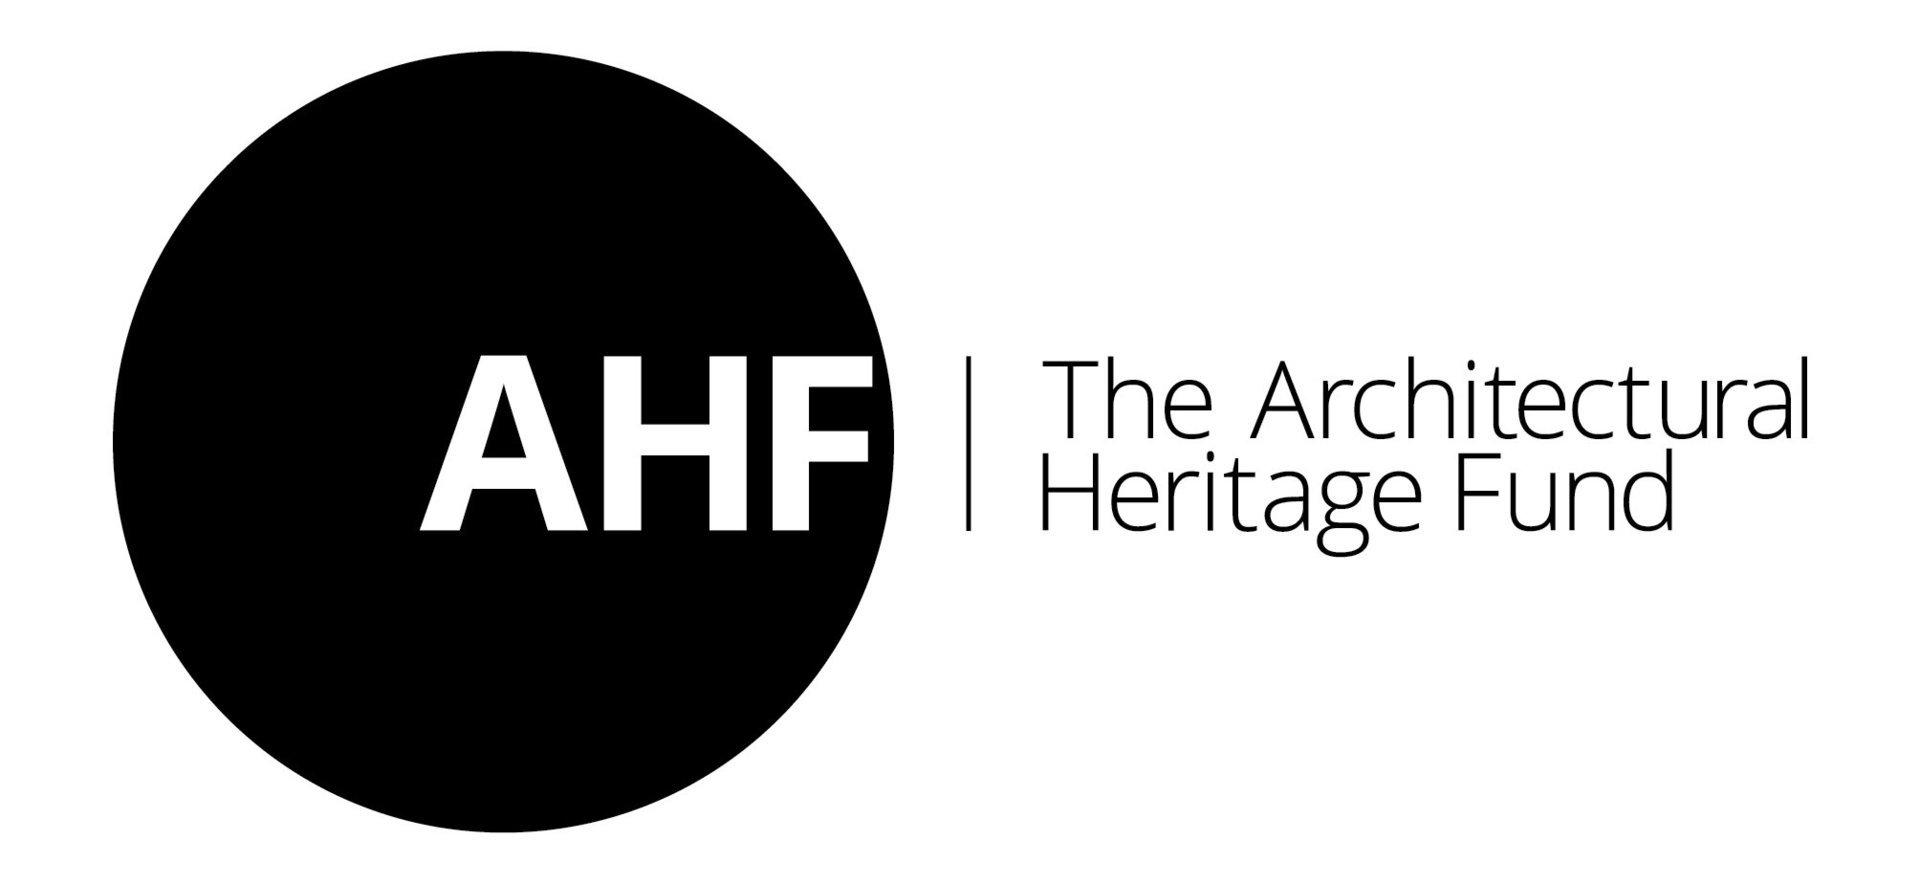 Architectural Heritage Fund